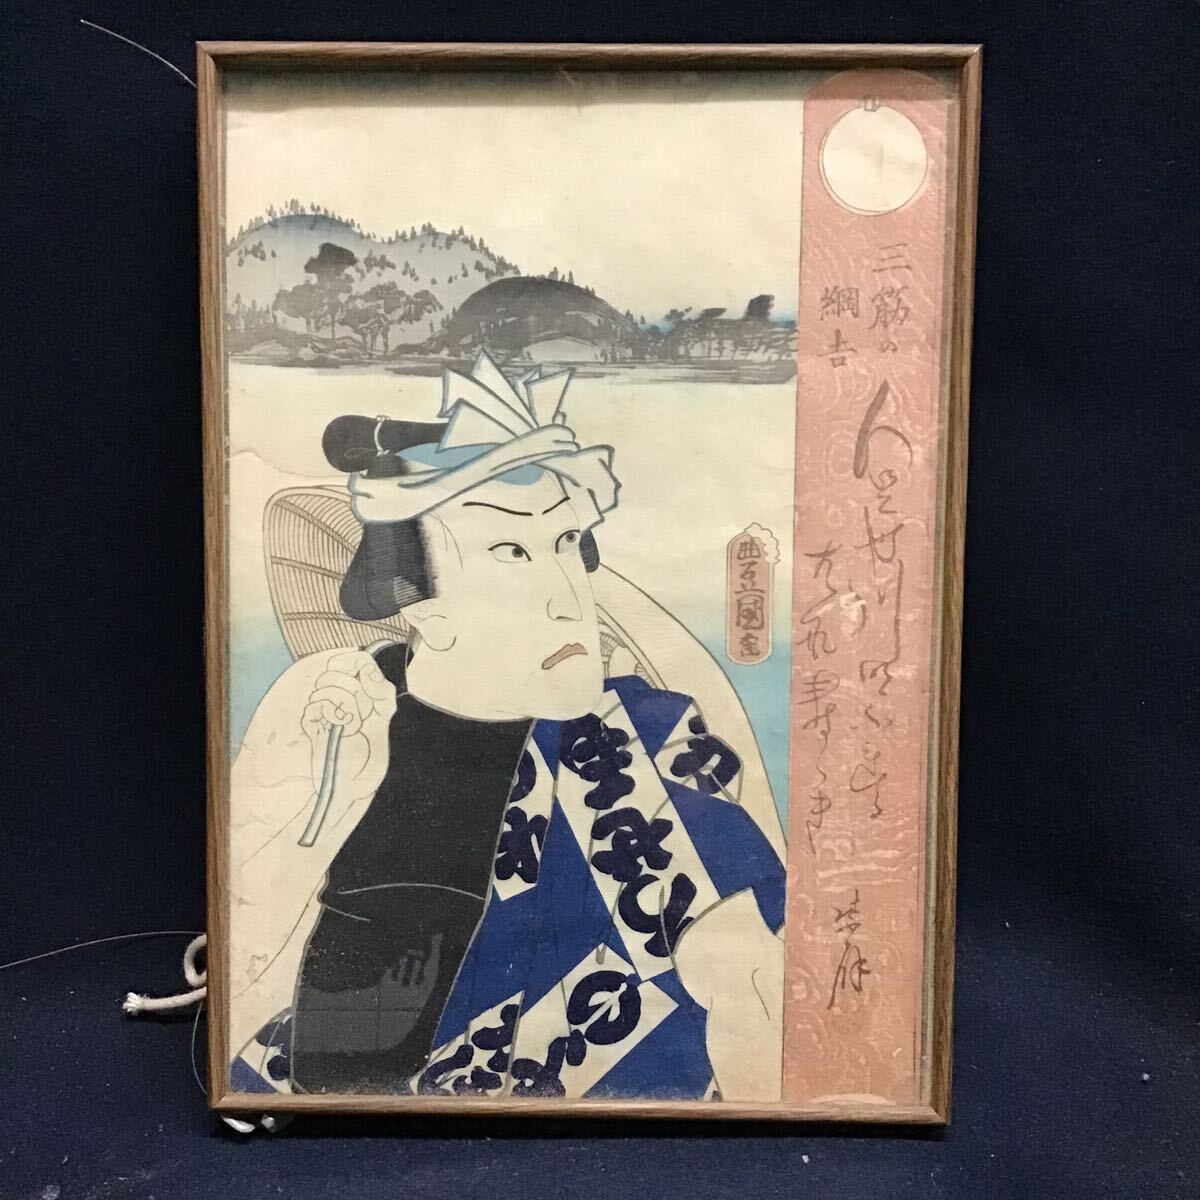 [Trabajo auténtico] Tres líneas de Tsunayoshi Utagawa Toyokuni Enmarcado Koizumi Kenbori Grabado en madera Ukiyo-e Nishiki-e Pintura Toyokuni de gran formato, cuadro, Ukiyo-e, imprimir, imagen kabuki, foto del actor